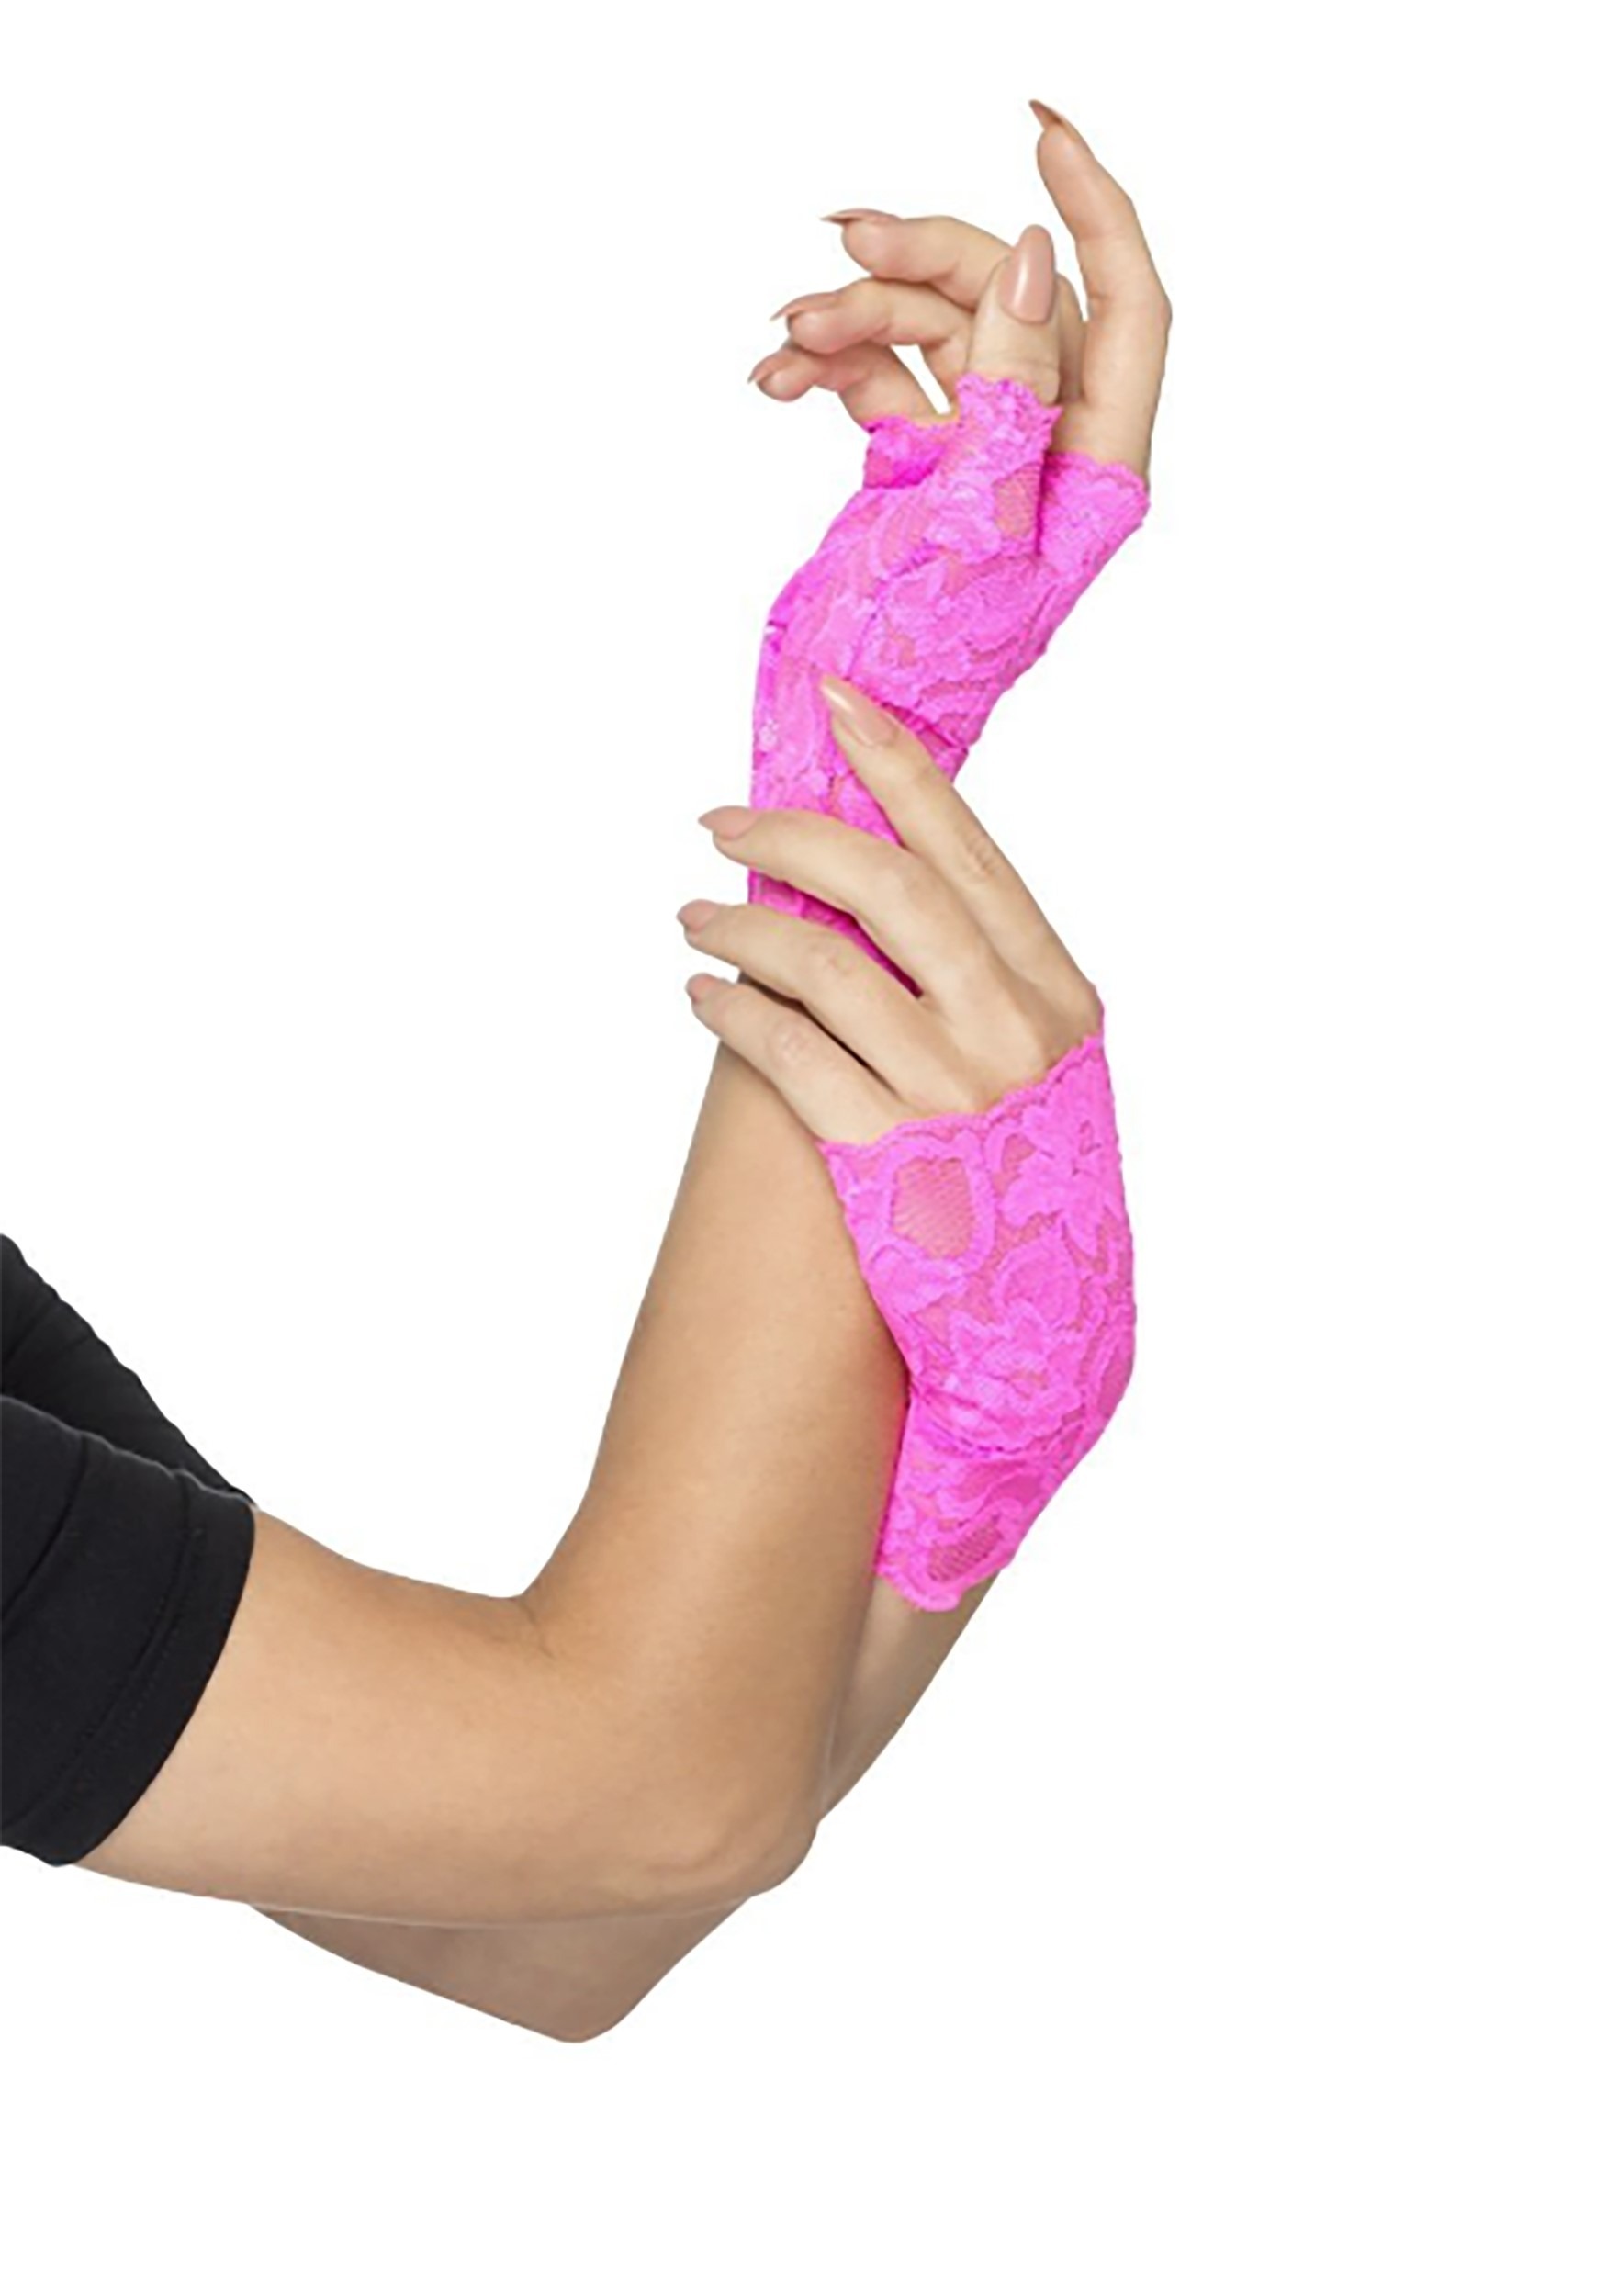 Women’s Lace Gloves Pink Fingerless